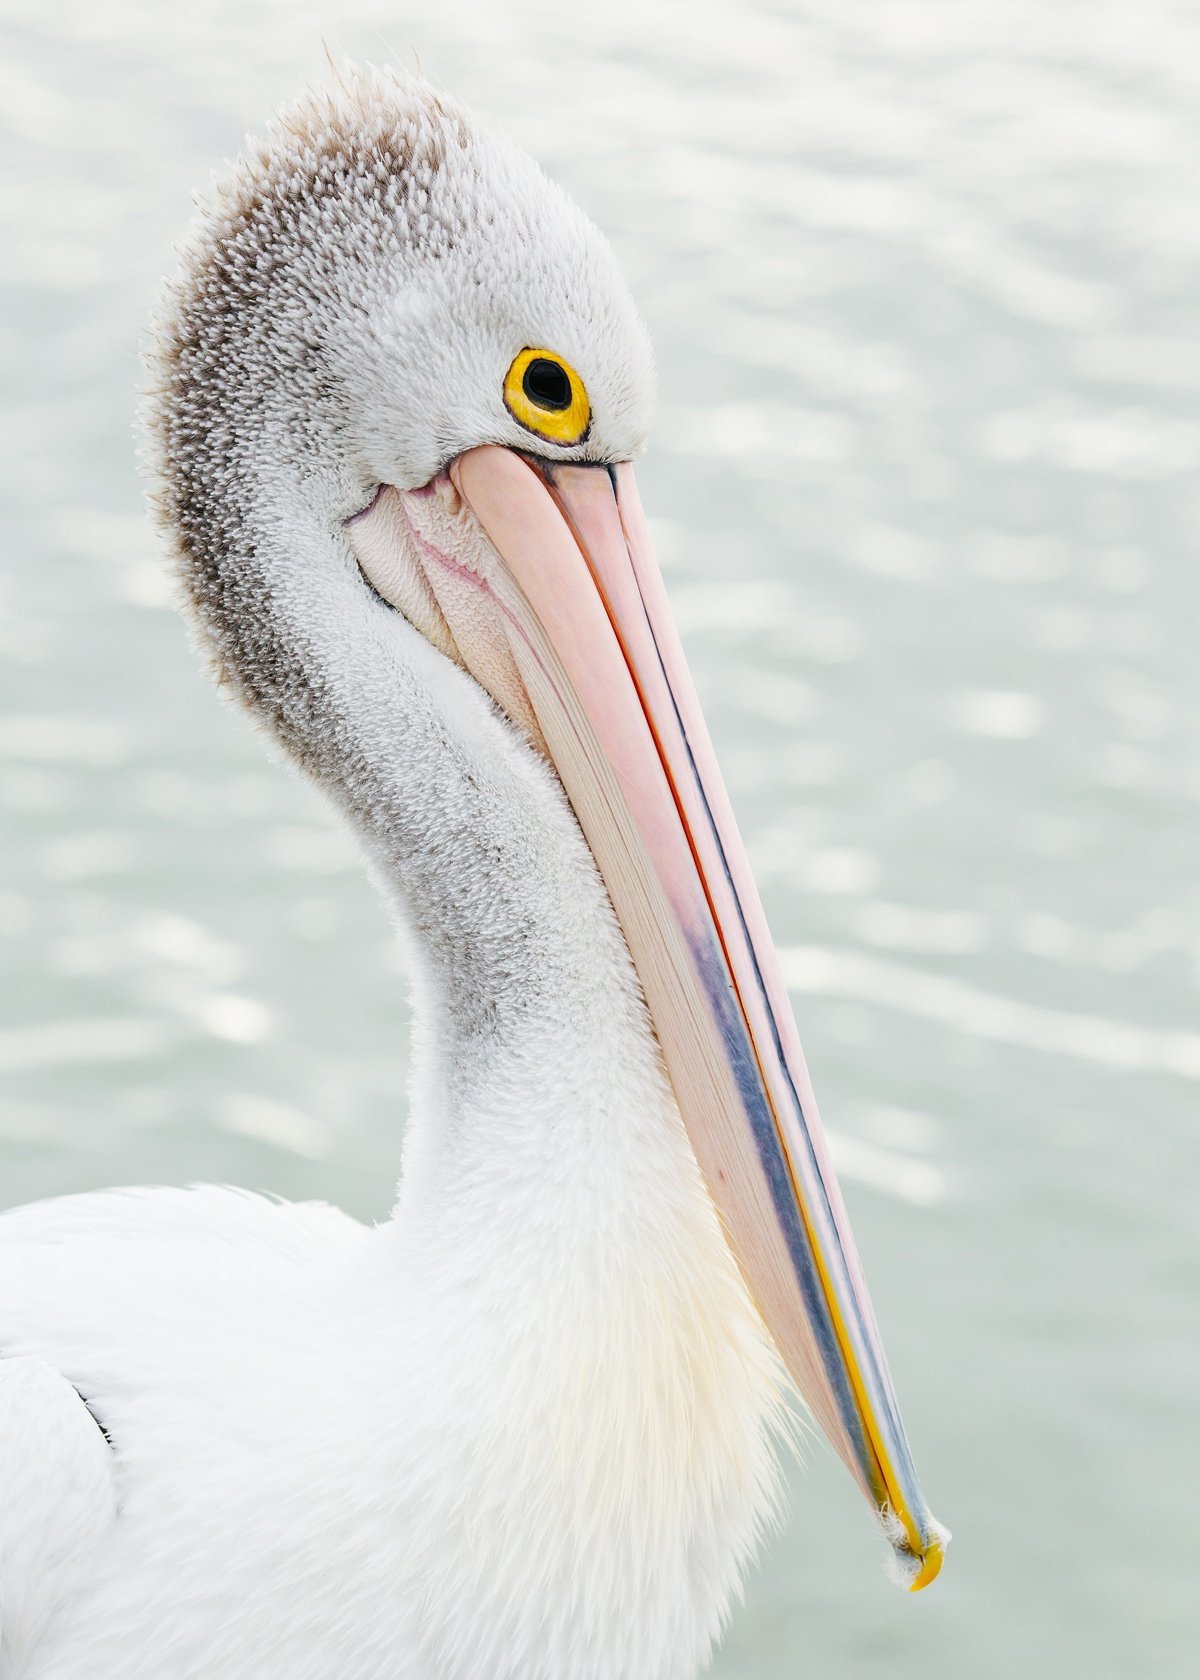 cameron-zegers-travel-photographer-kangaroo-island-australia-pelican-portrait